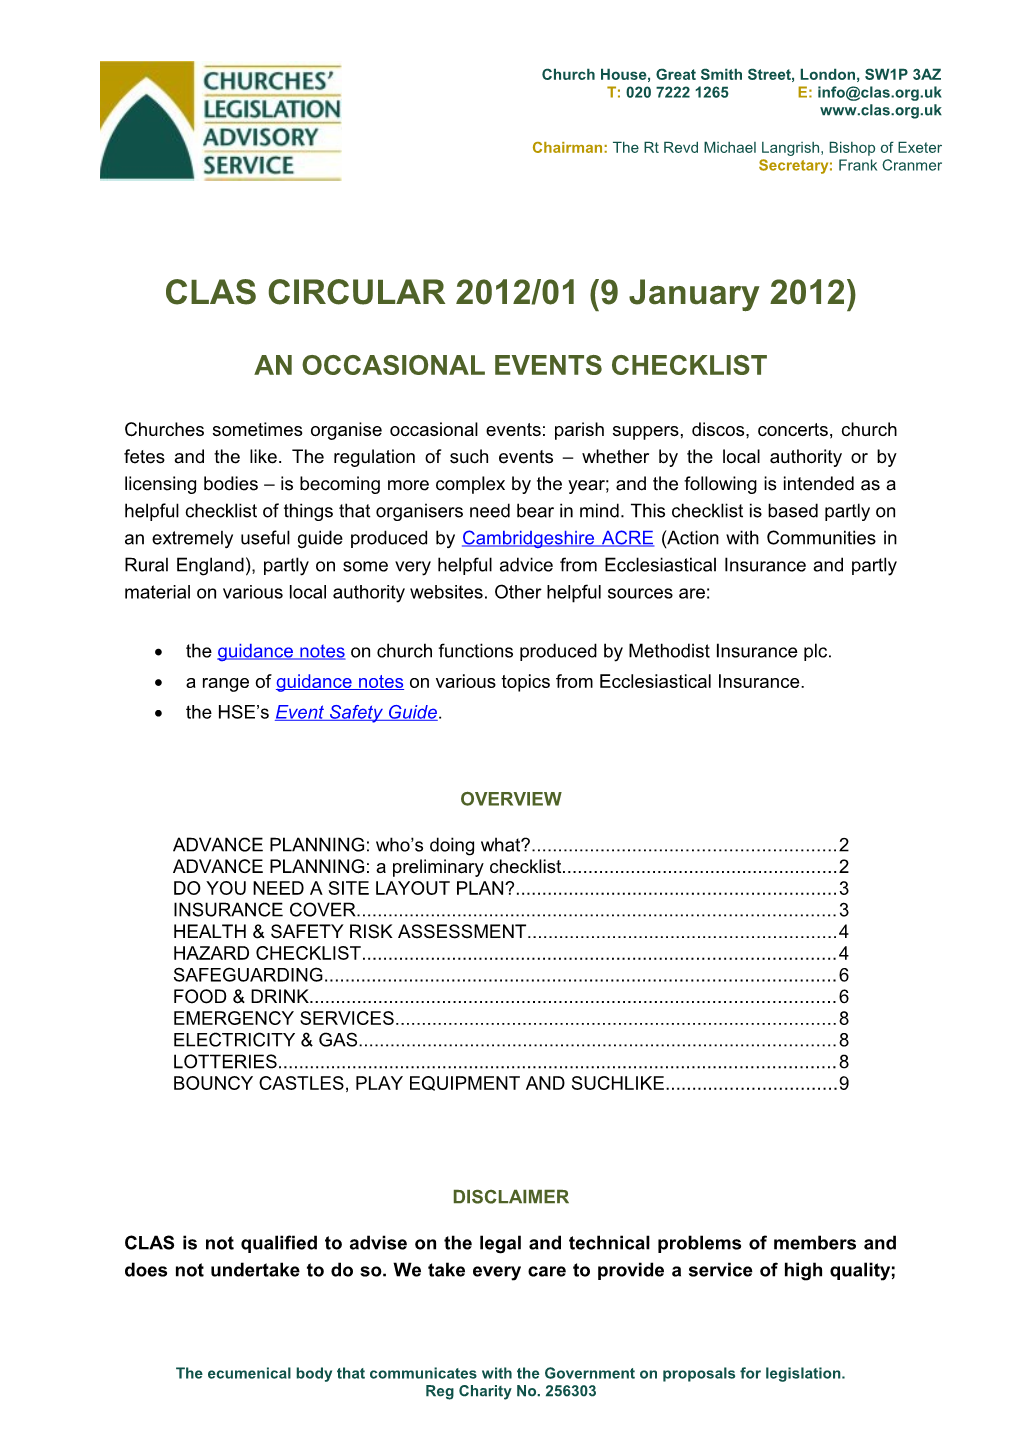 Churches Legislation Advisory Service2012/01: Occasional Events Checklist